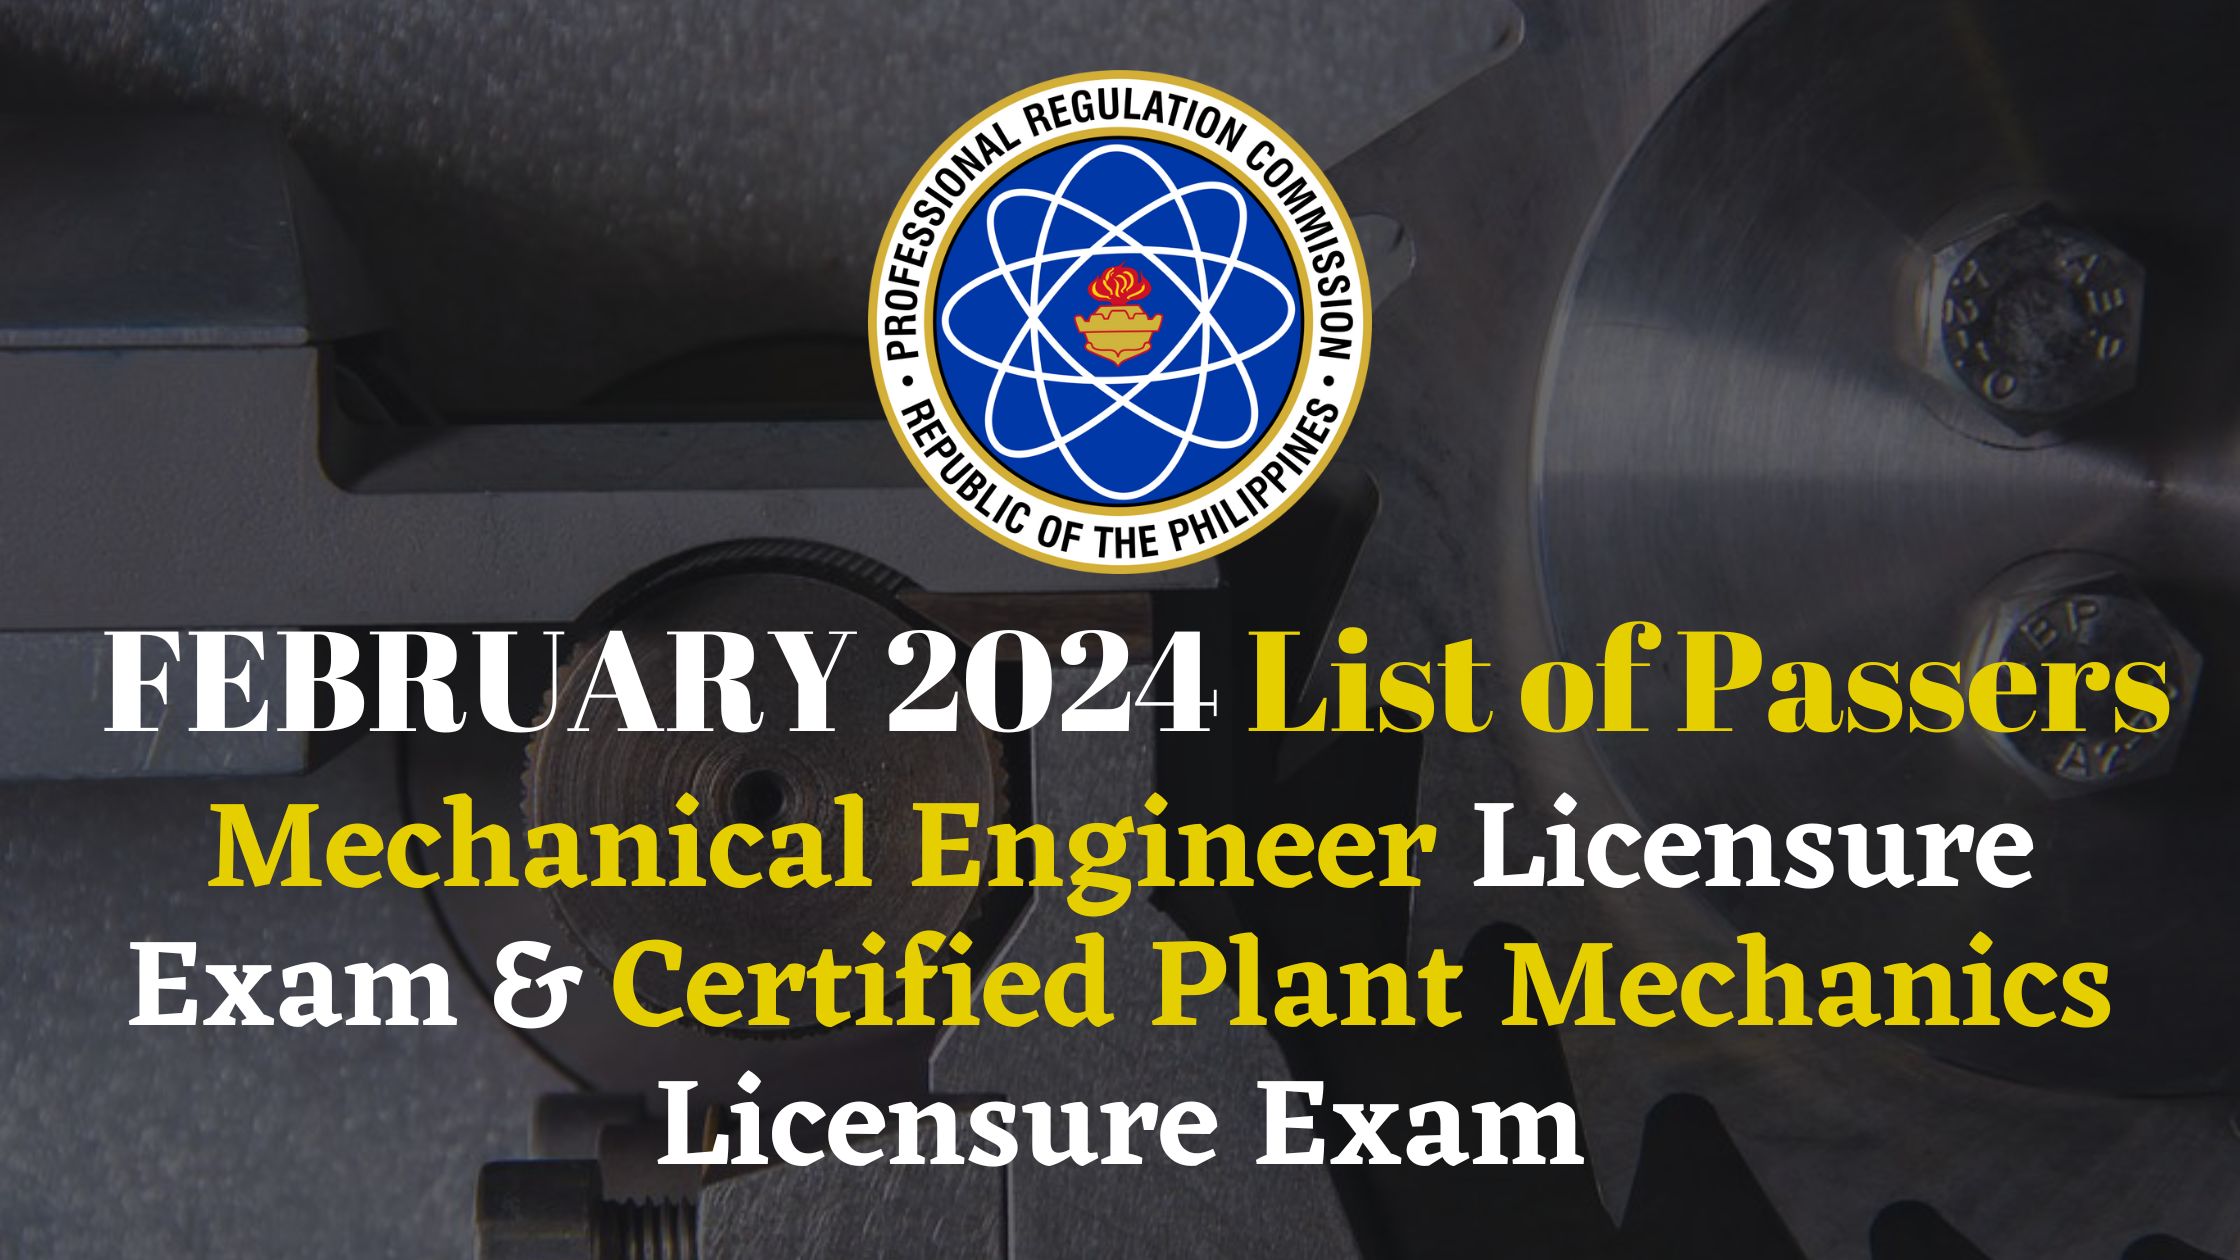 LIST OF PASSERS FEBRUARY 2024 MECHANICAL ENGINEER LICENSURE EXAM